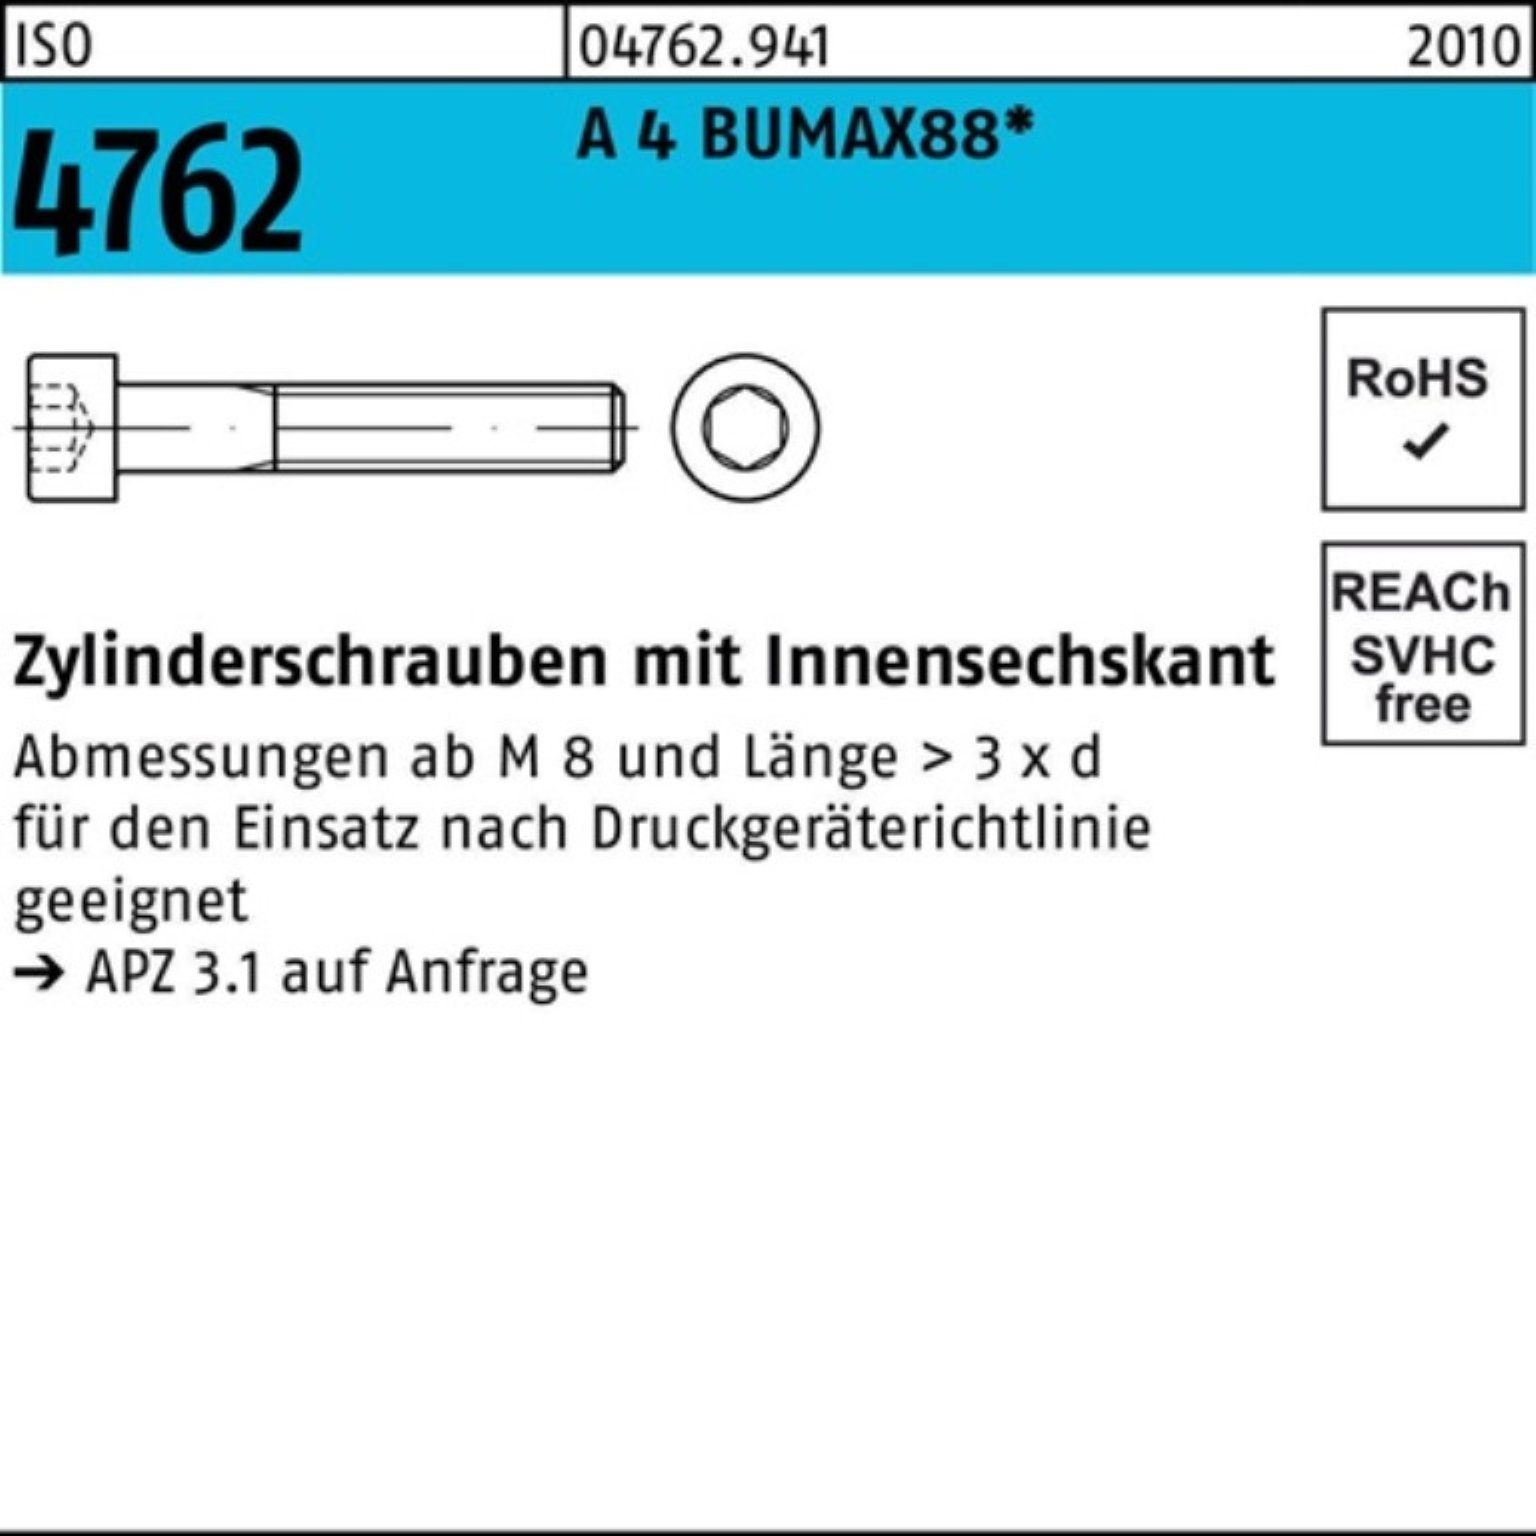 Bufab Zylinderschraube 100er Pack Zylinderschraube ISO 4762 Innen-6kt M6x 20 A 4 BUMAX88 100